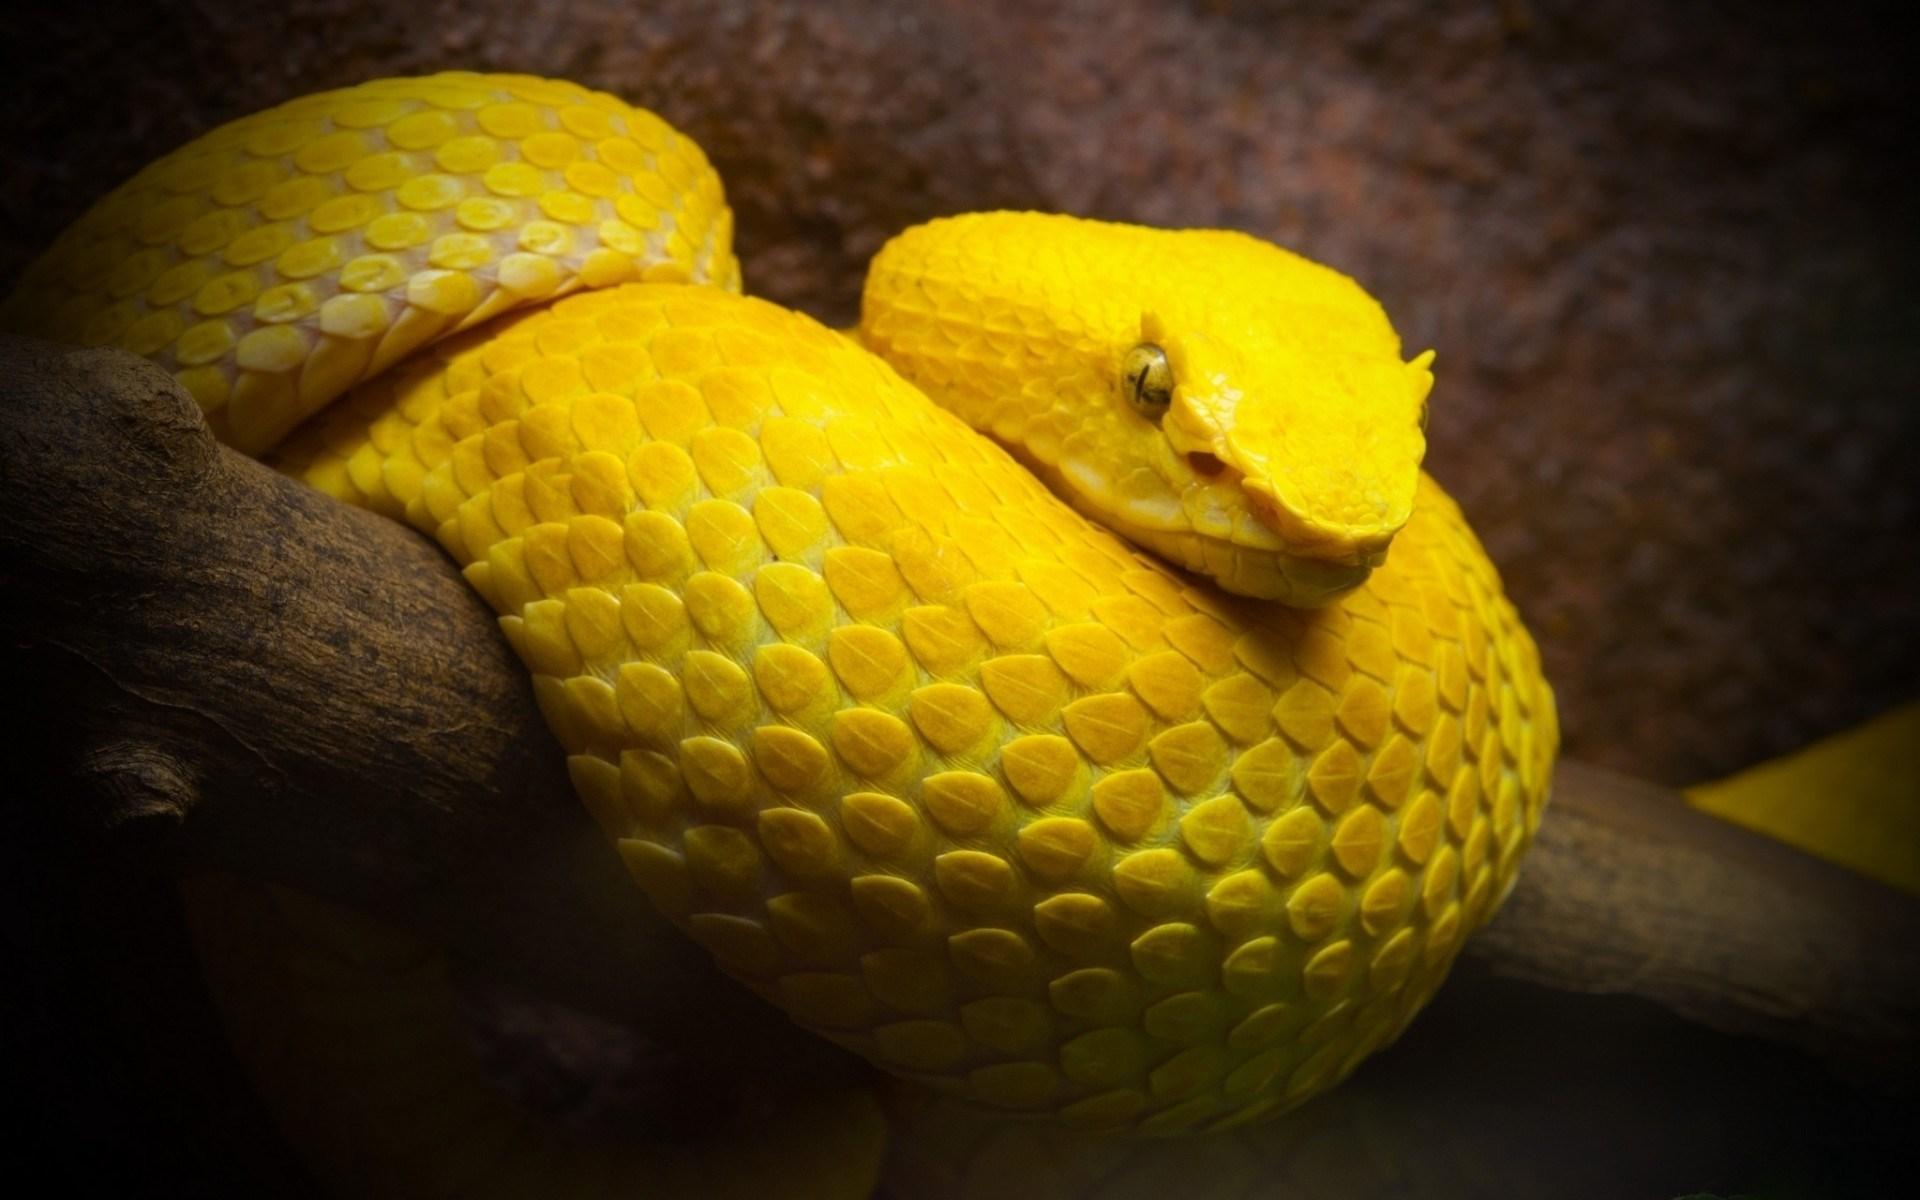  Ular Kuning  Yellow Snake 456091 HD Wallpaper 